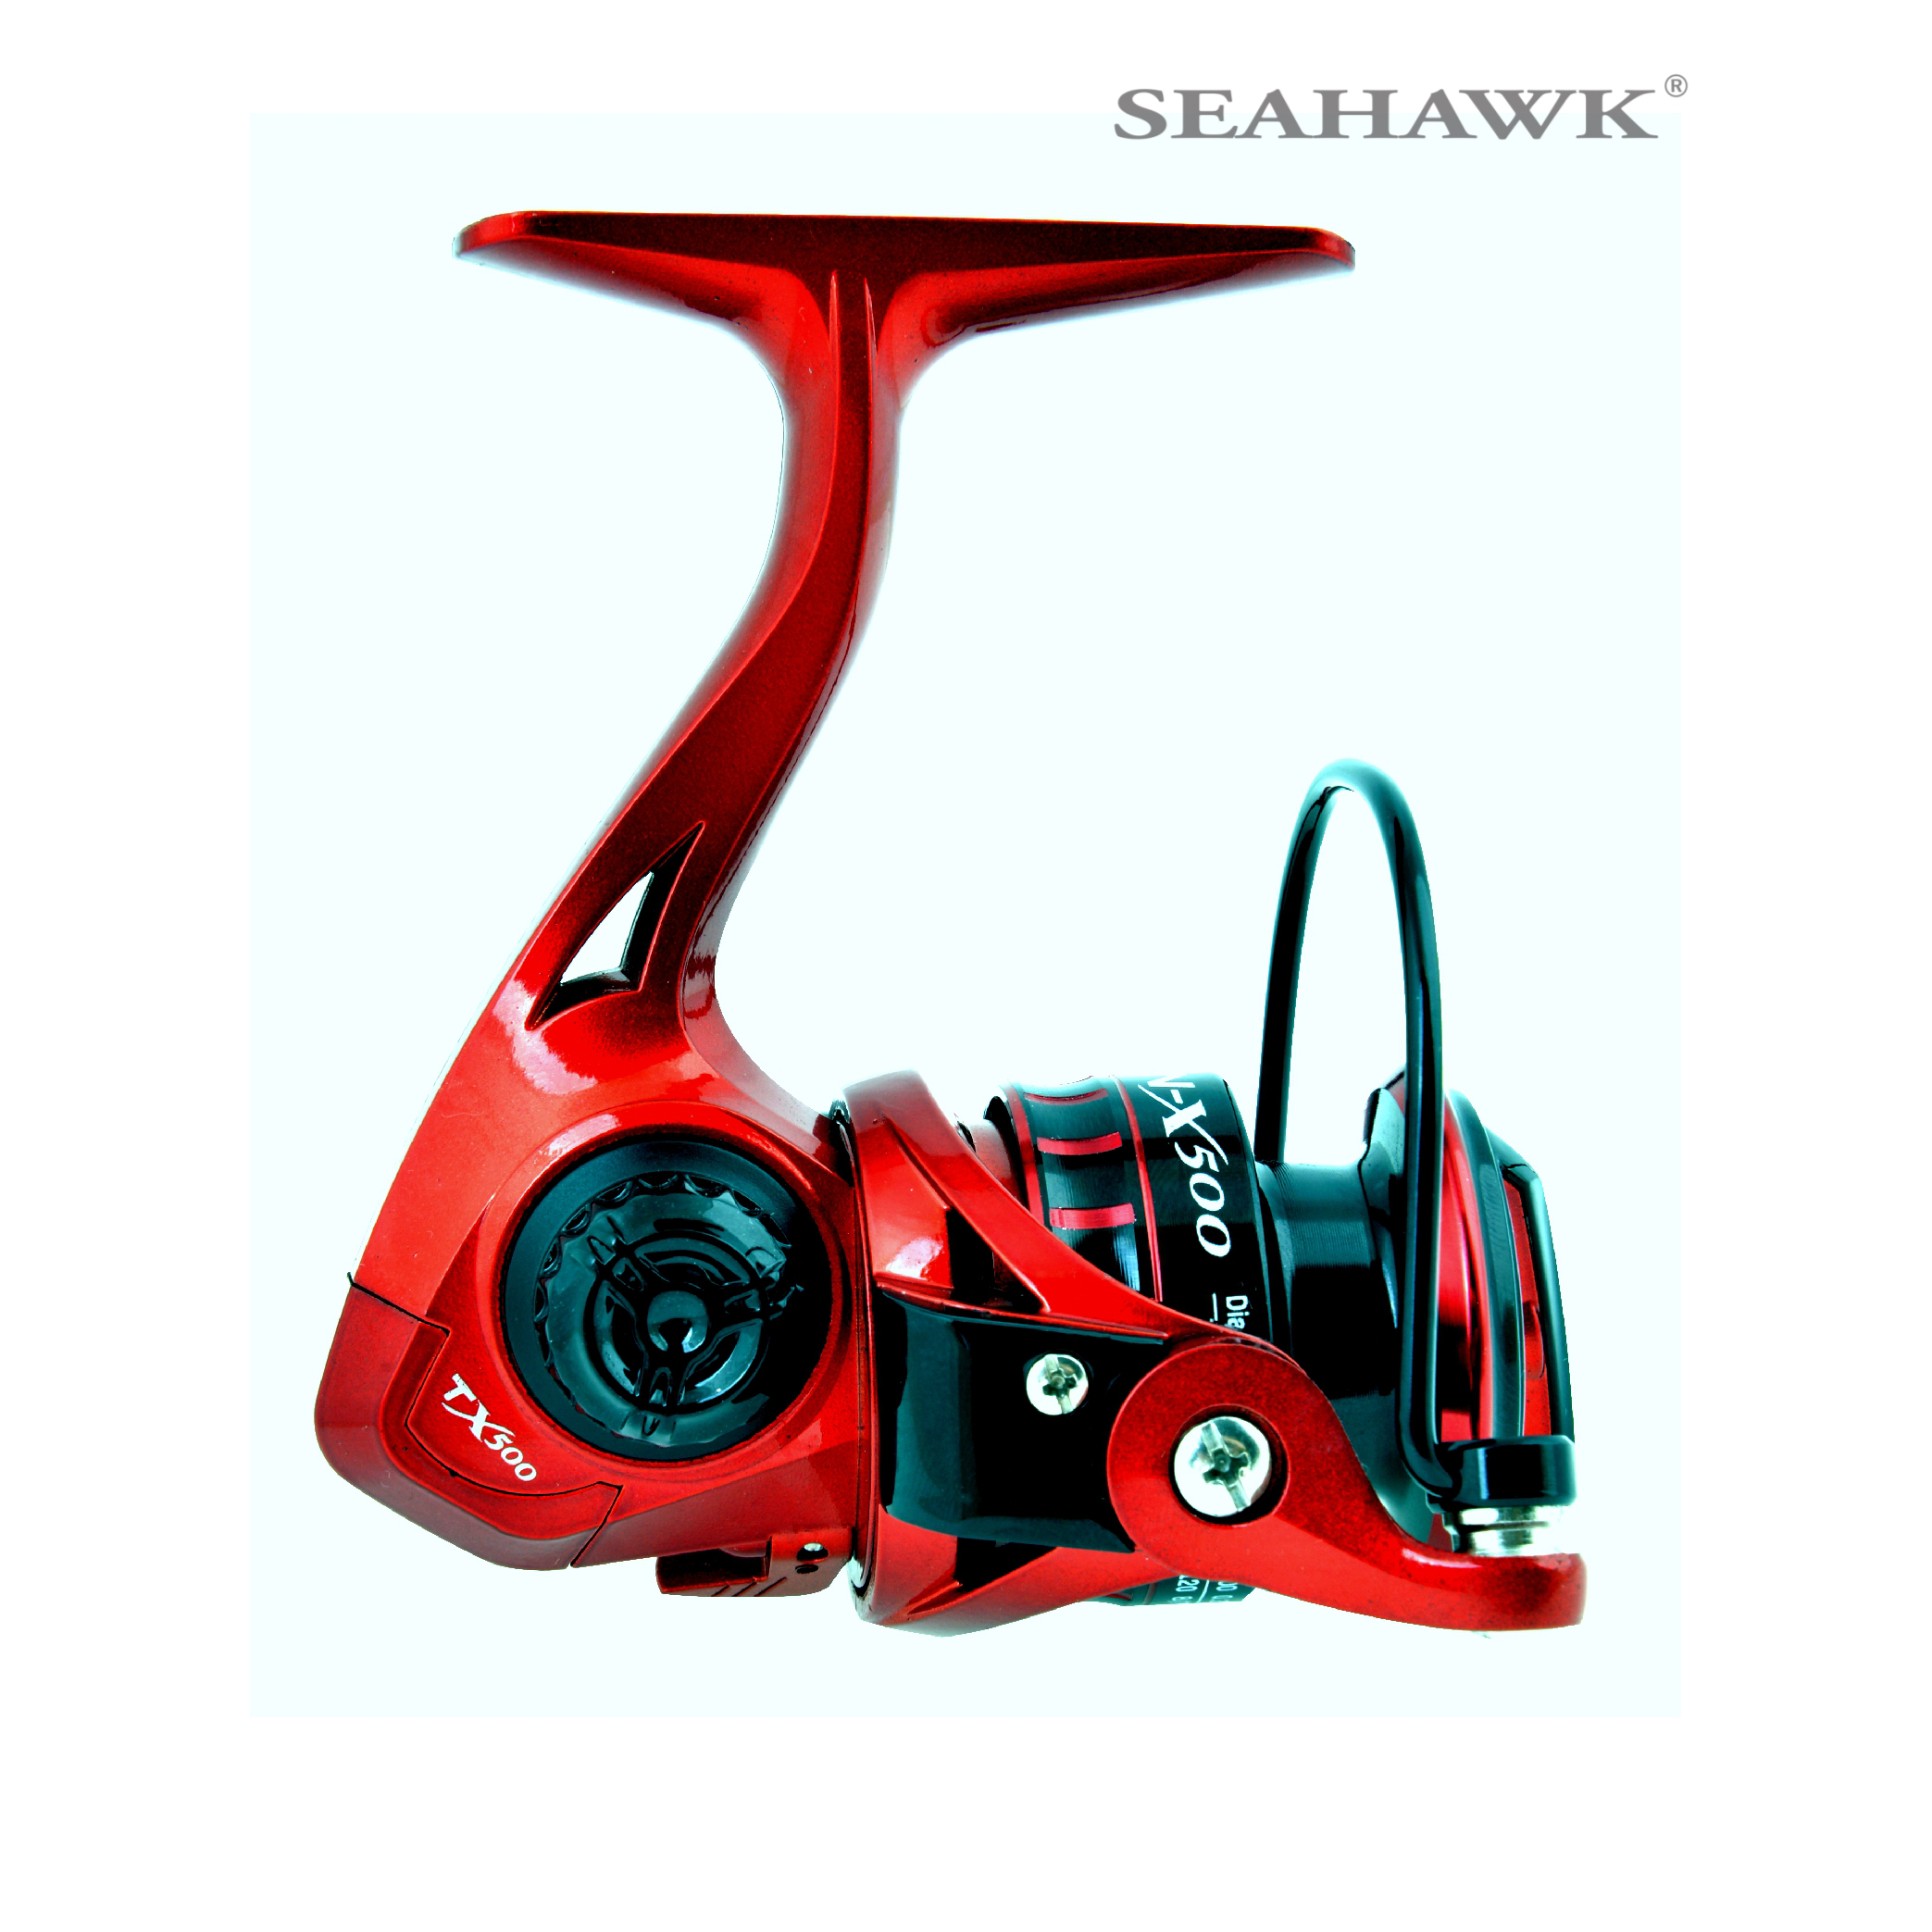 Seahawk Tron X TX 03